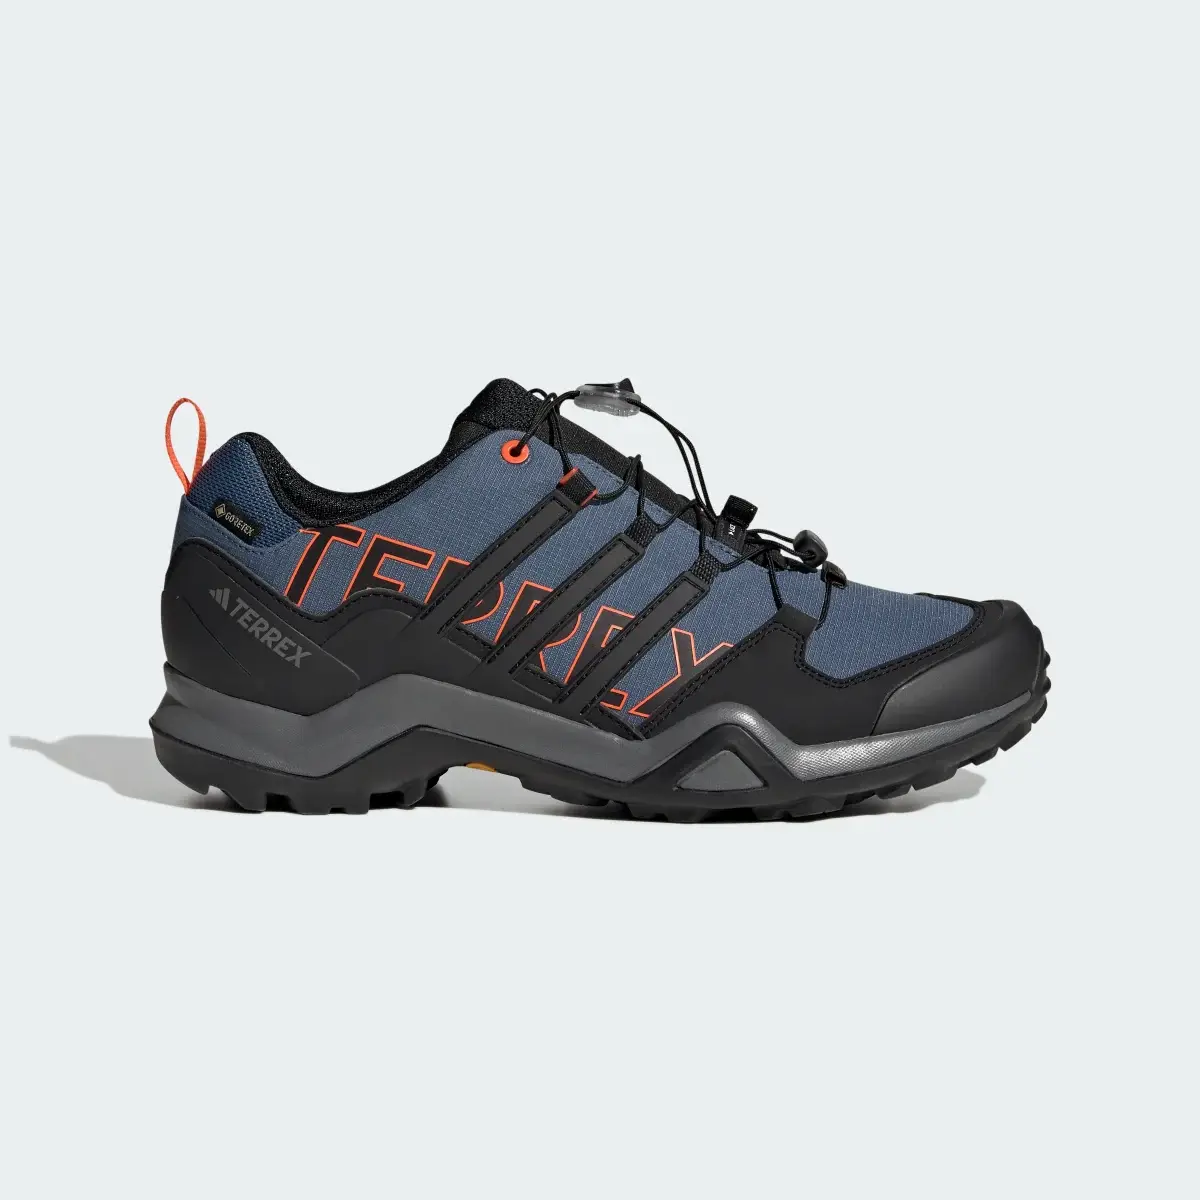 Adidas Terrex Swift R2 GORE-TEX Hiking Shoes. 2